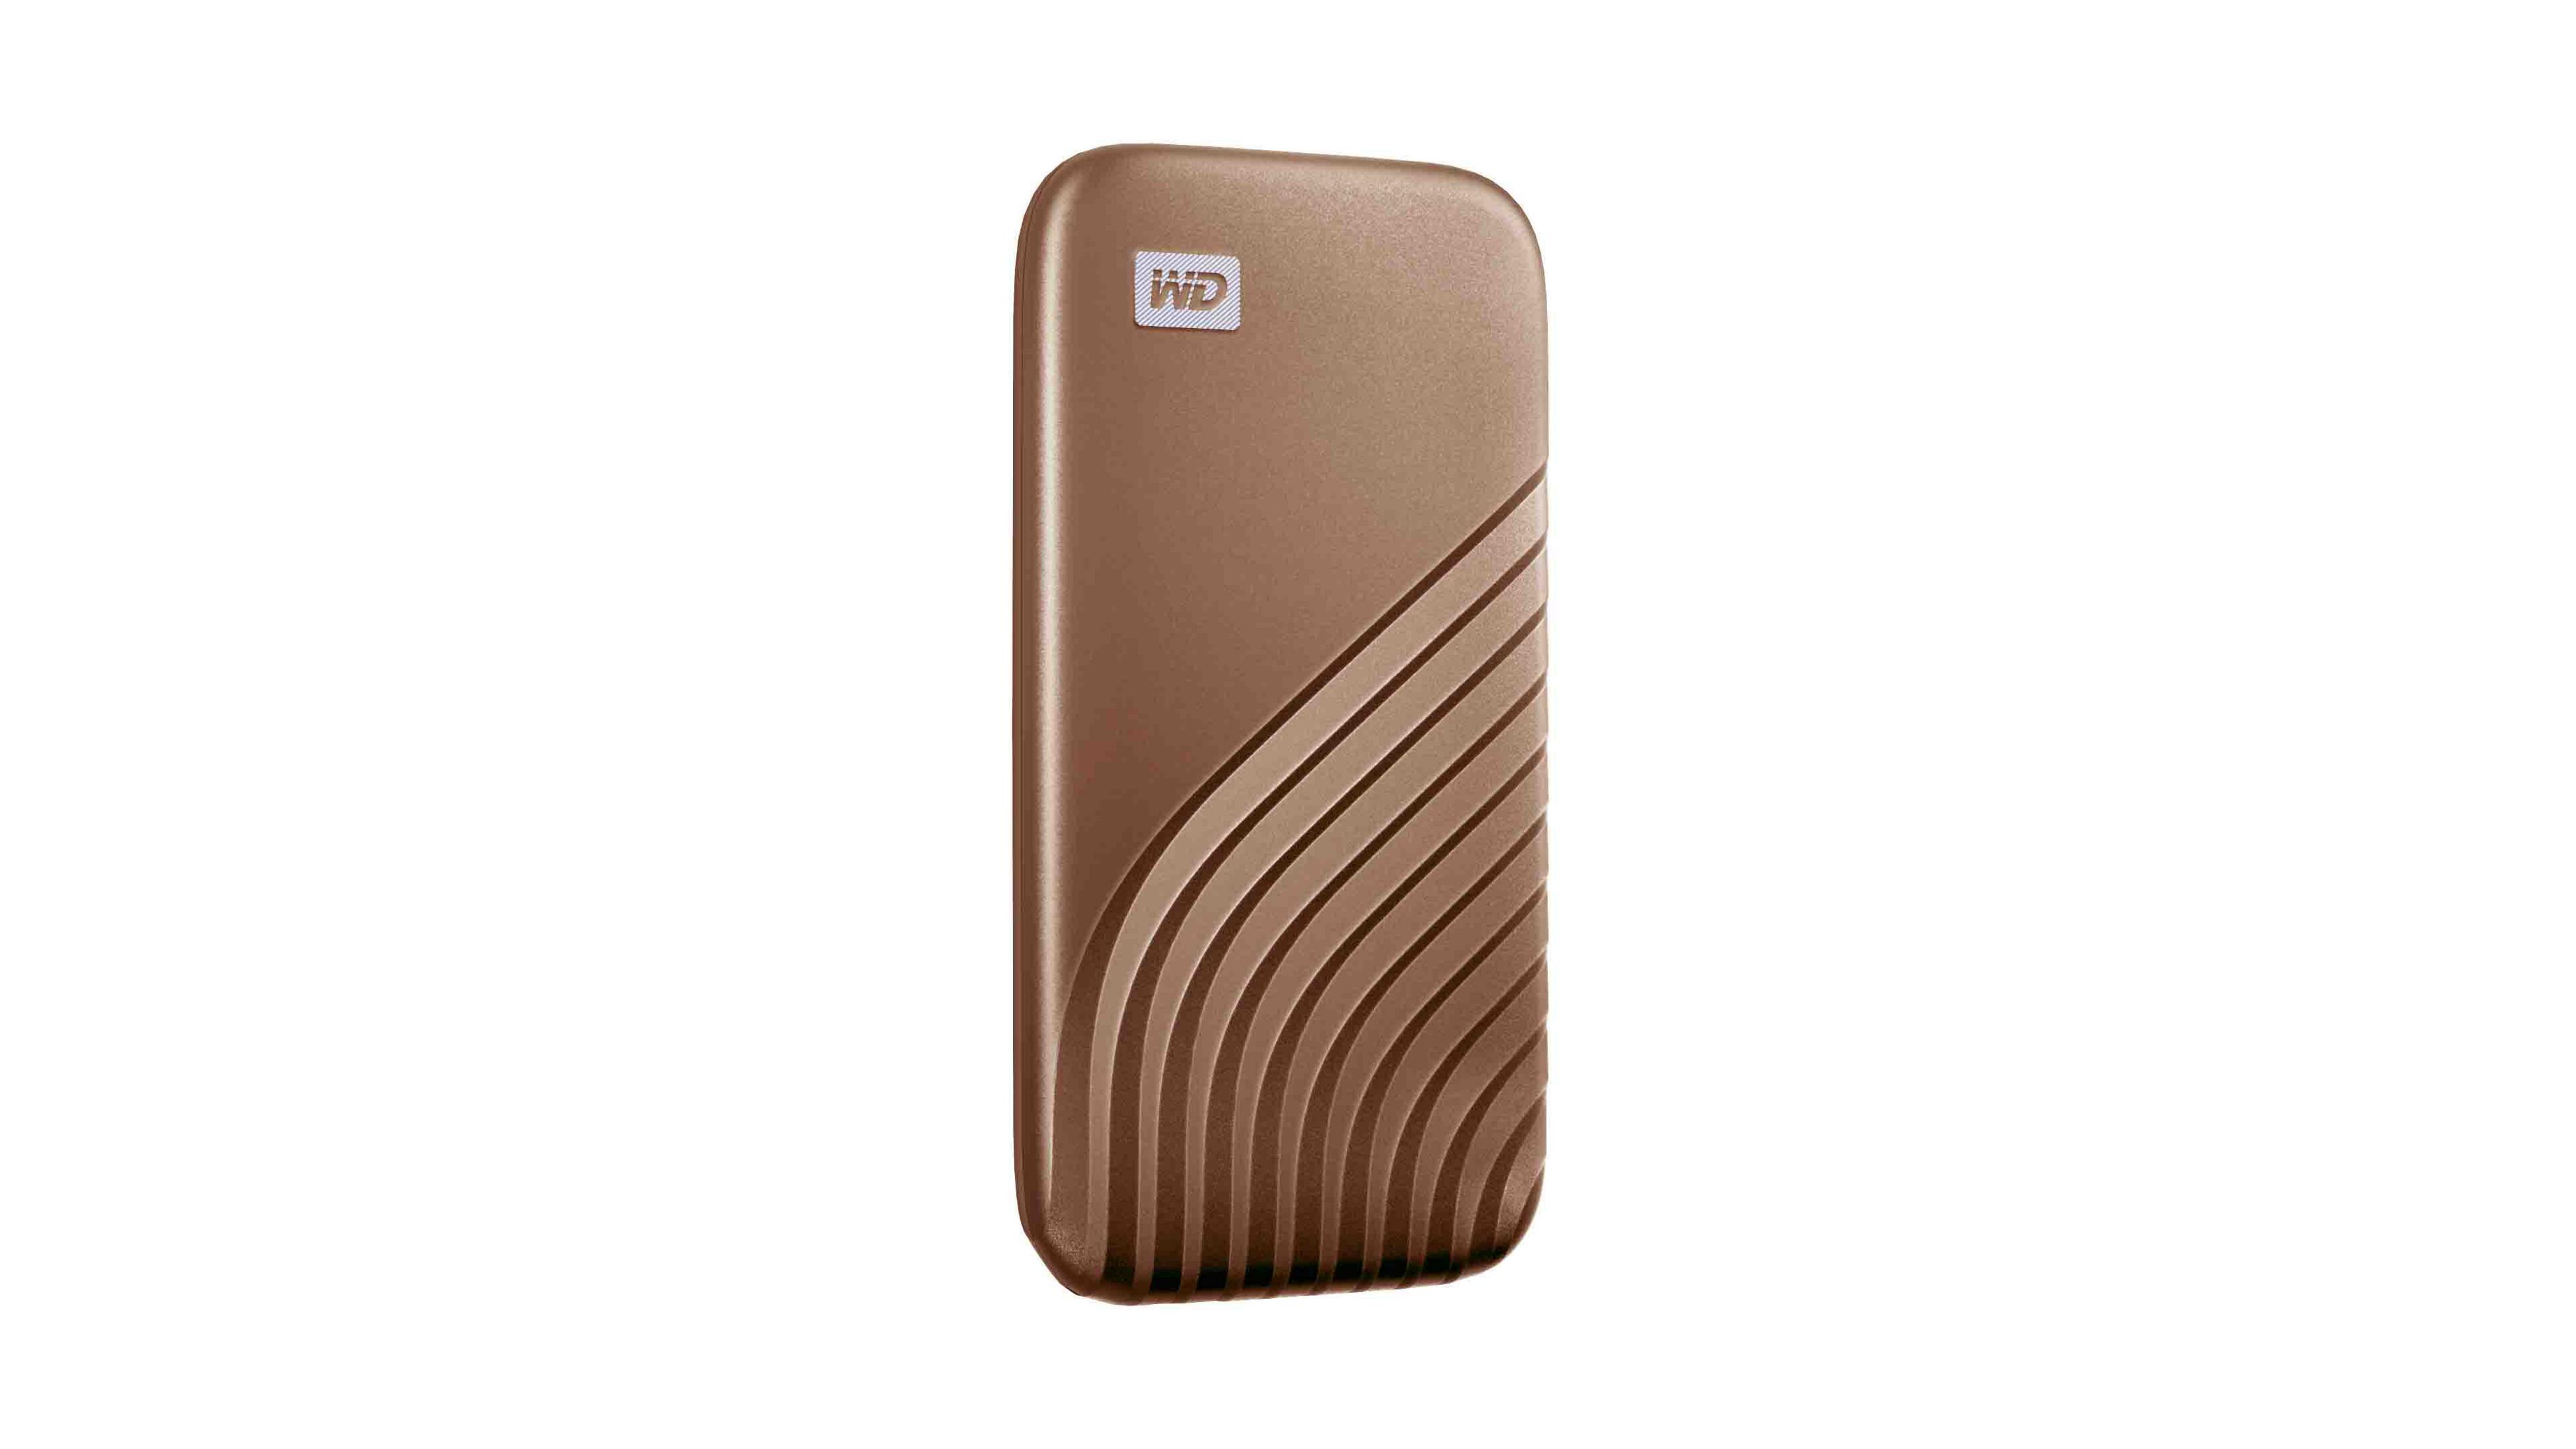 WD WDBAGF0020BGD-WESN 2TB GOLD SSD, 2 extern, SSD, Gold 2,5 Zoll, TB